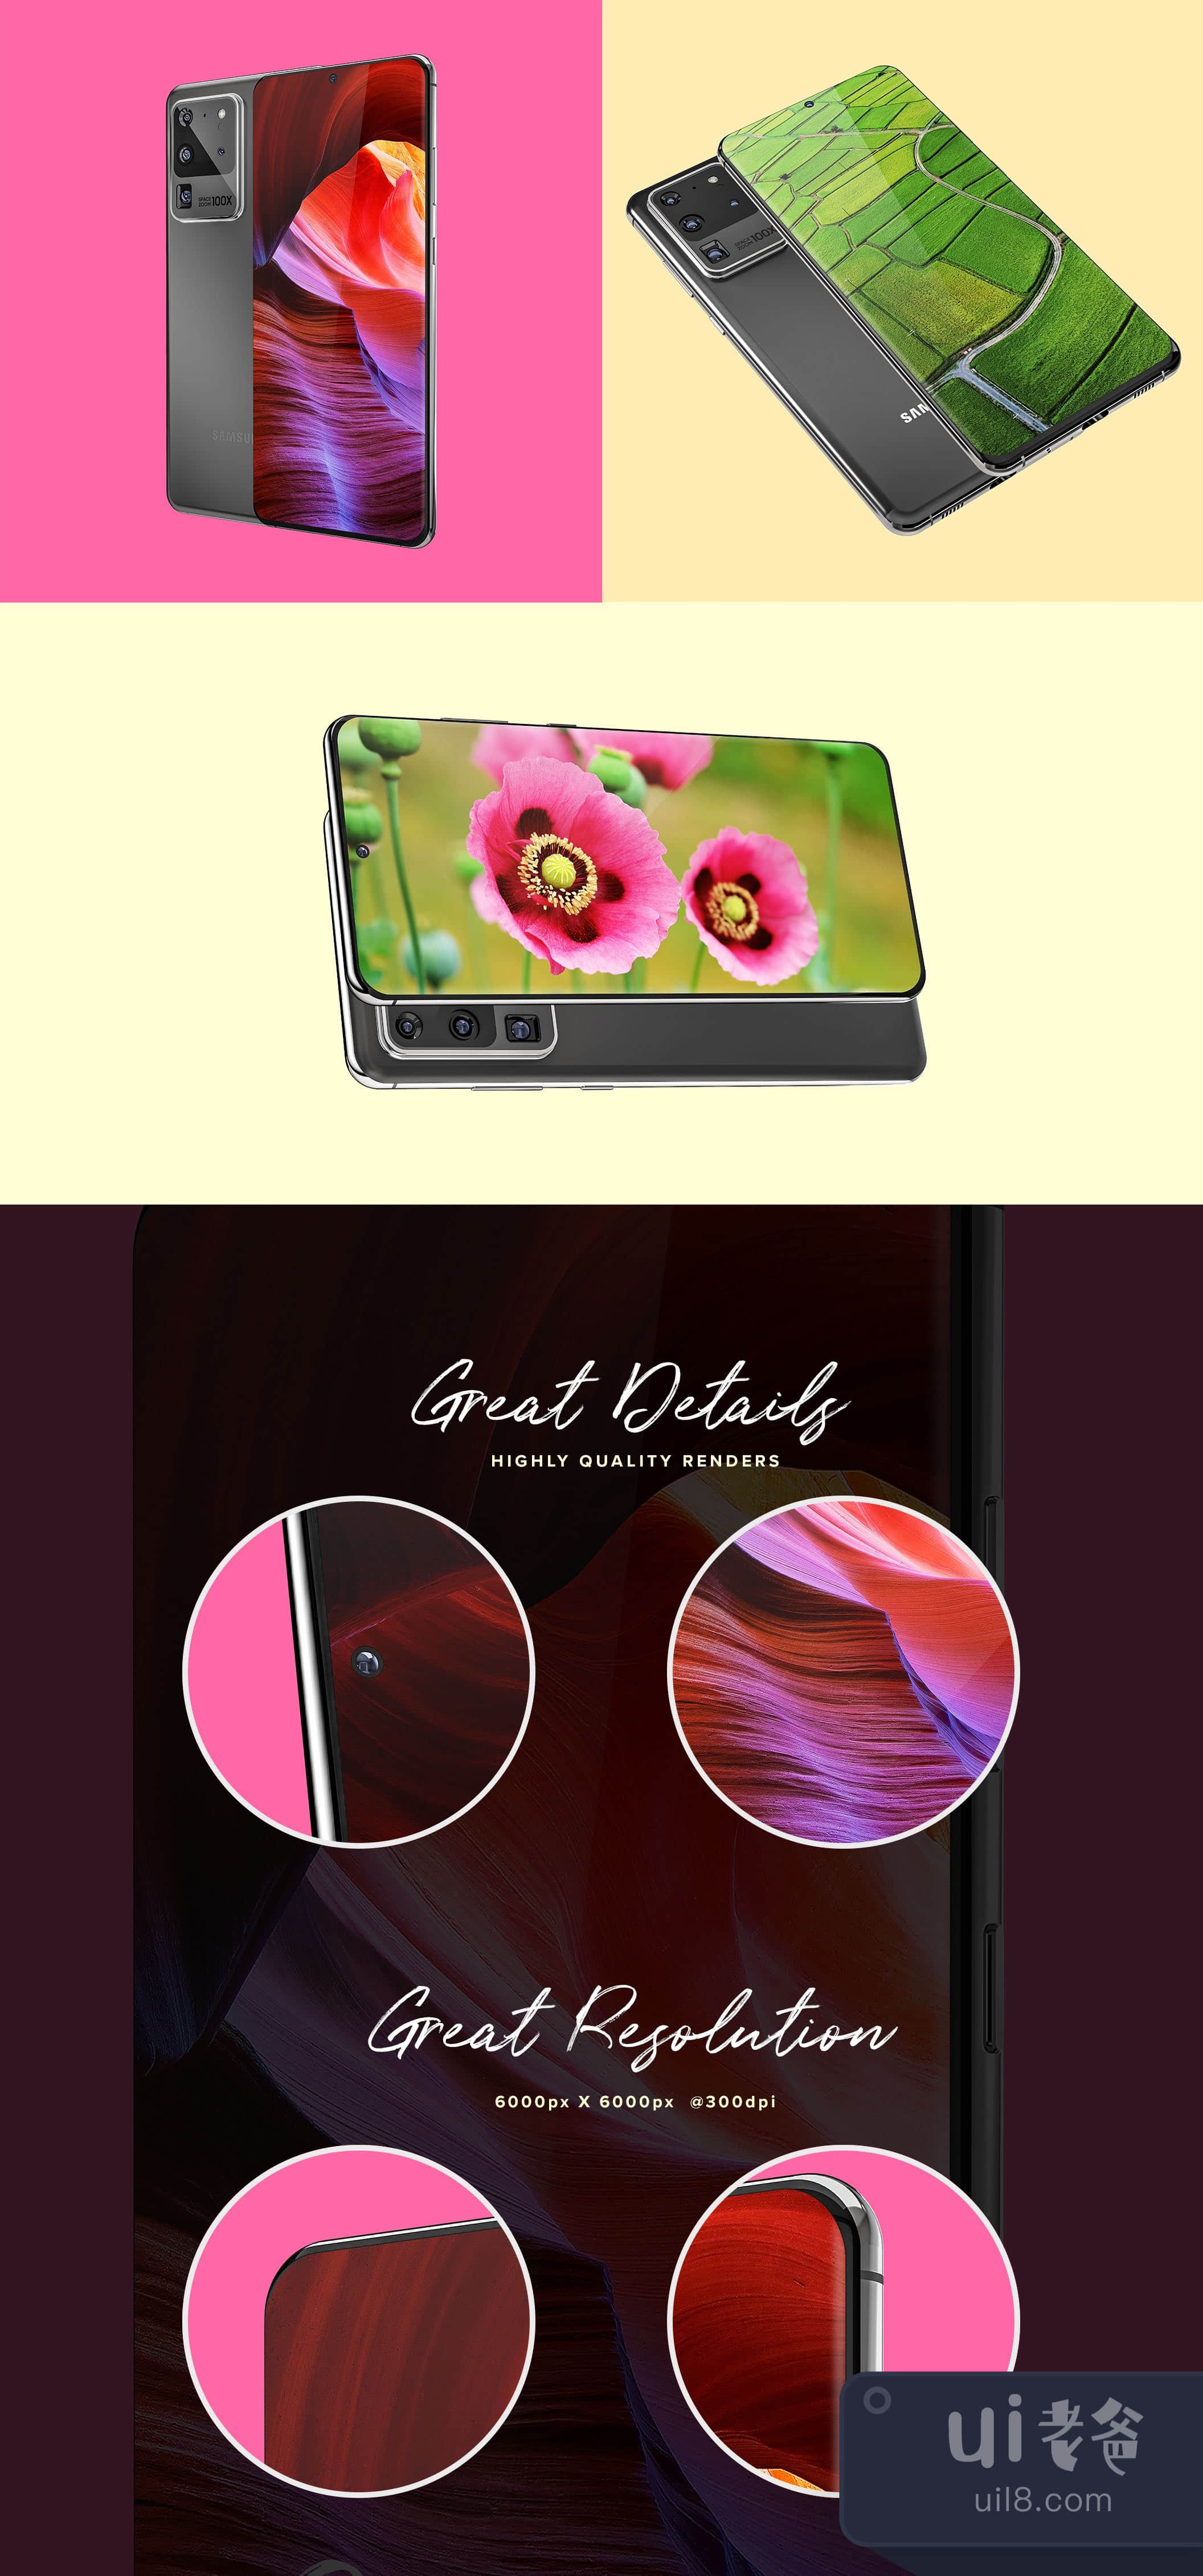 Galaxy S20 Ultra设备模拟图 (Galaxy S20 Ultra Device Moc插图1